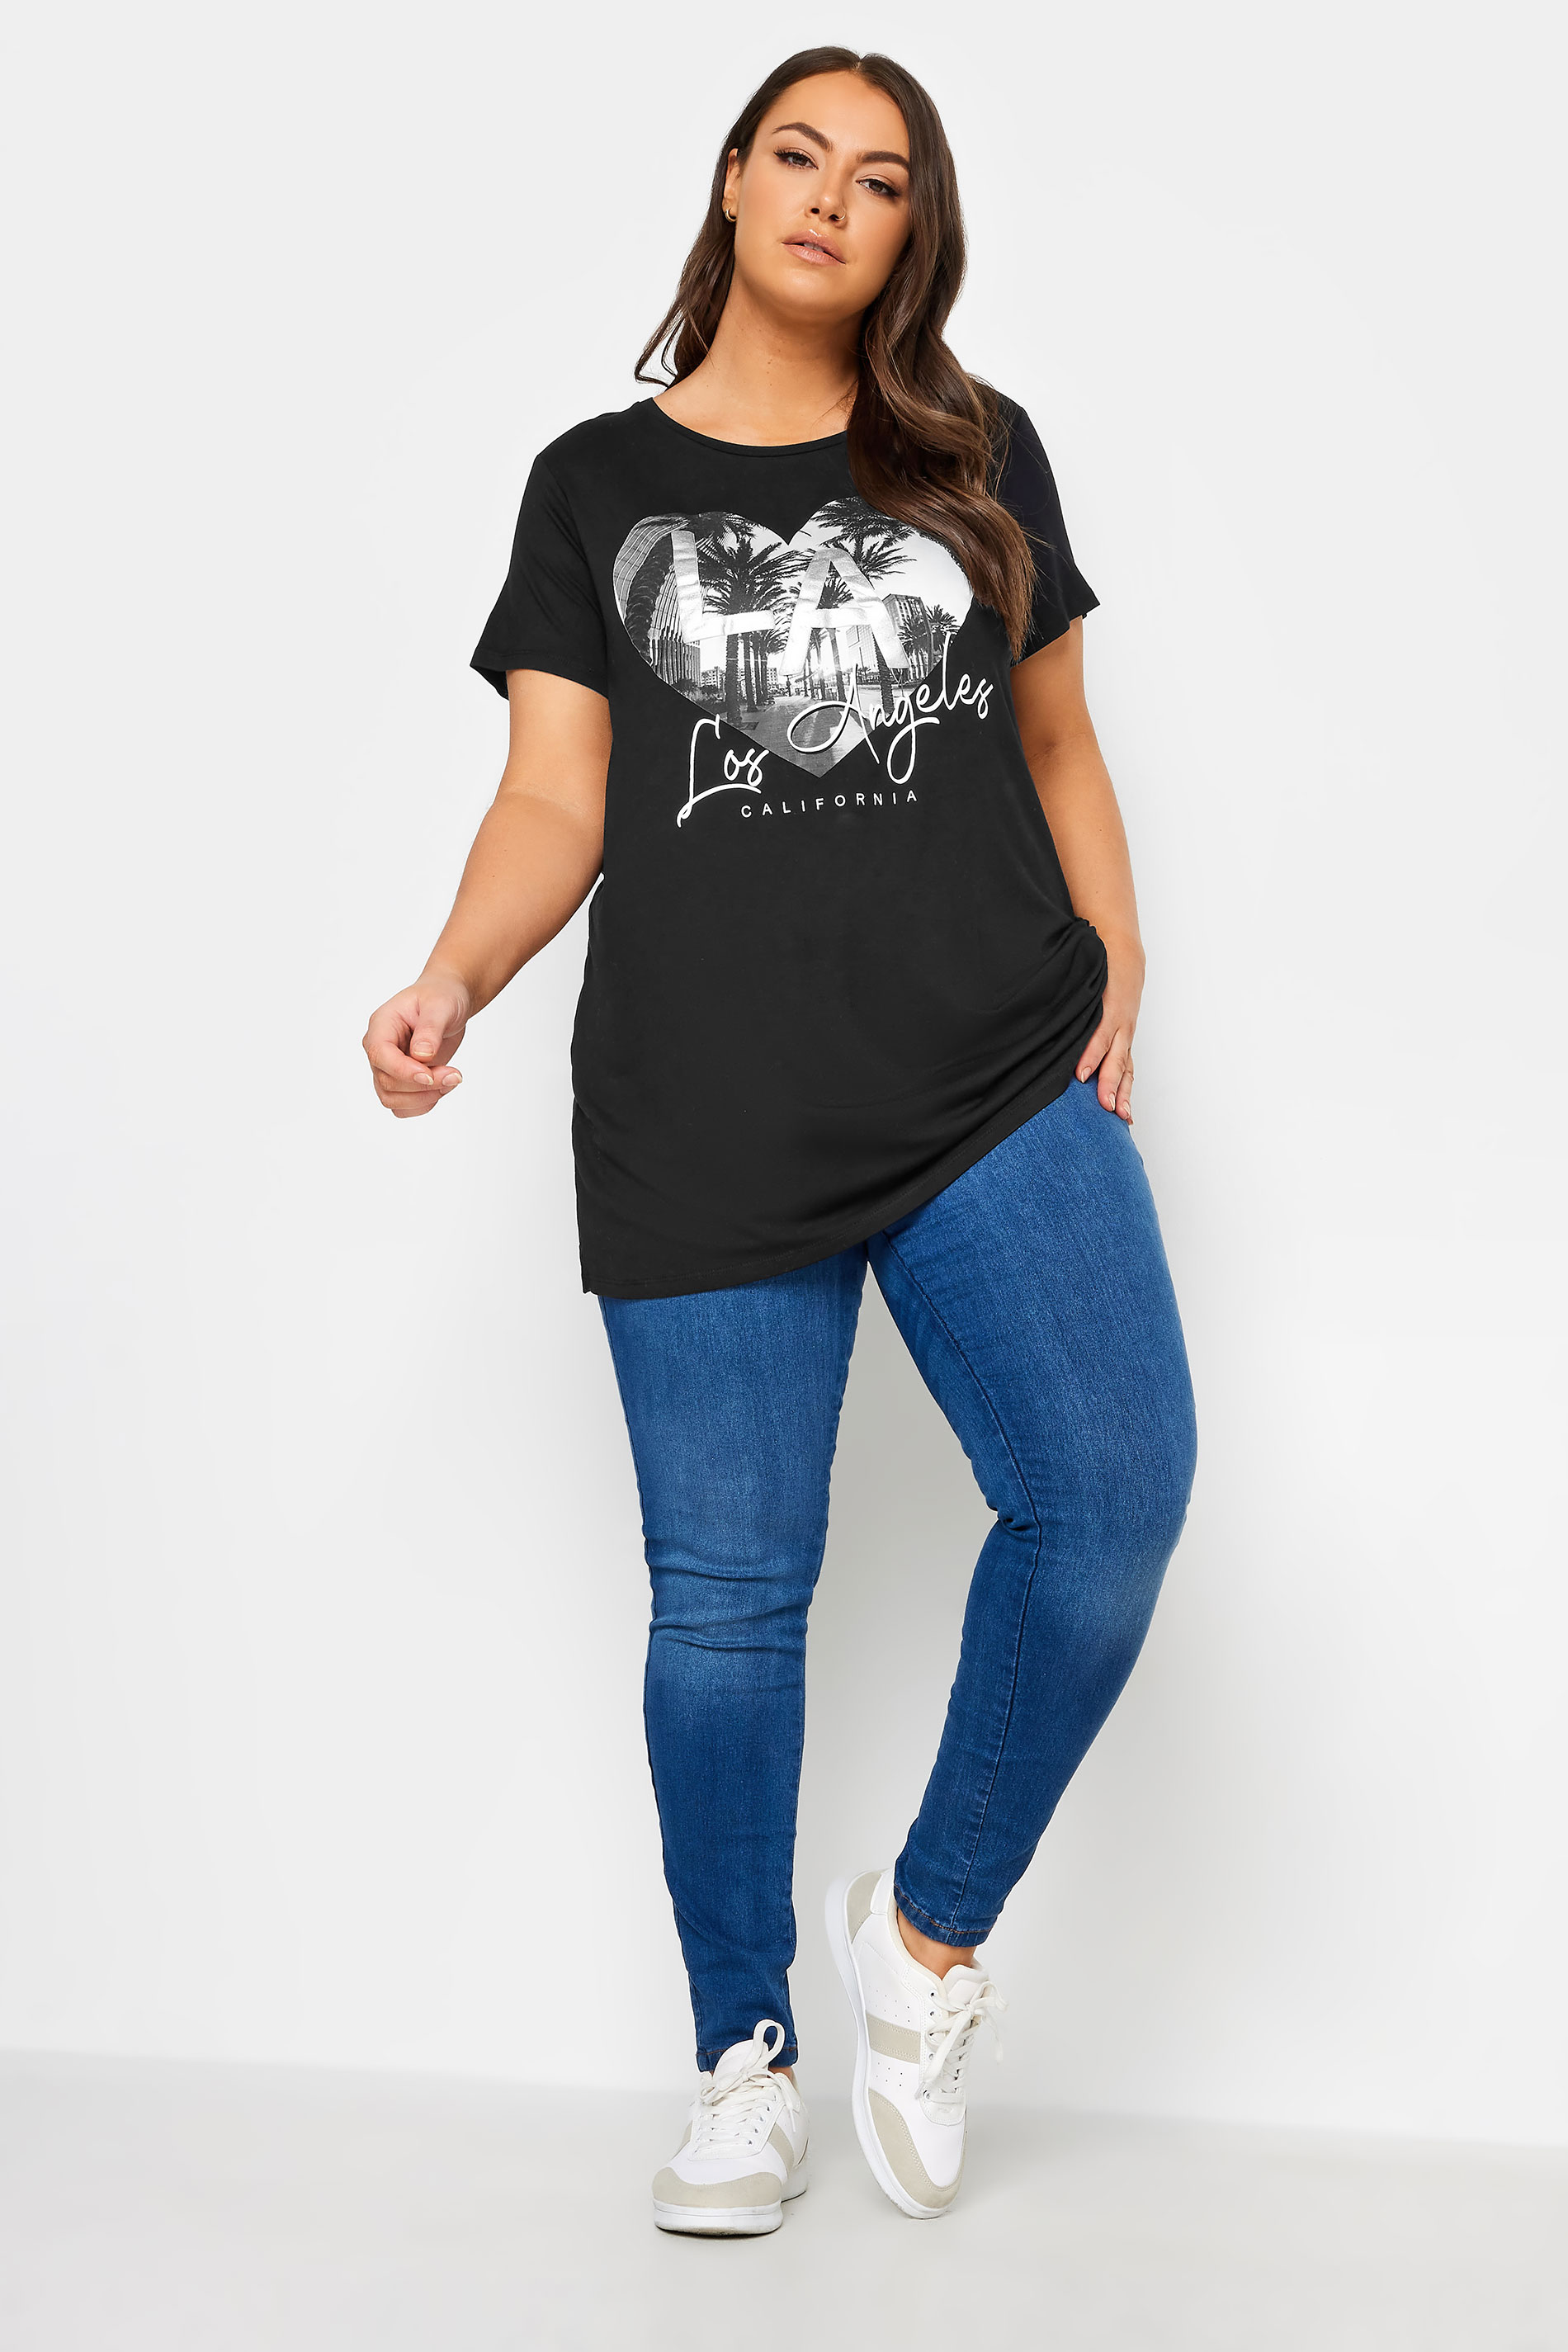 YOURS Plus Size Black Foil Print 'Los Angeles' Slogan T-Shirt | Yours Clothing 2